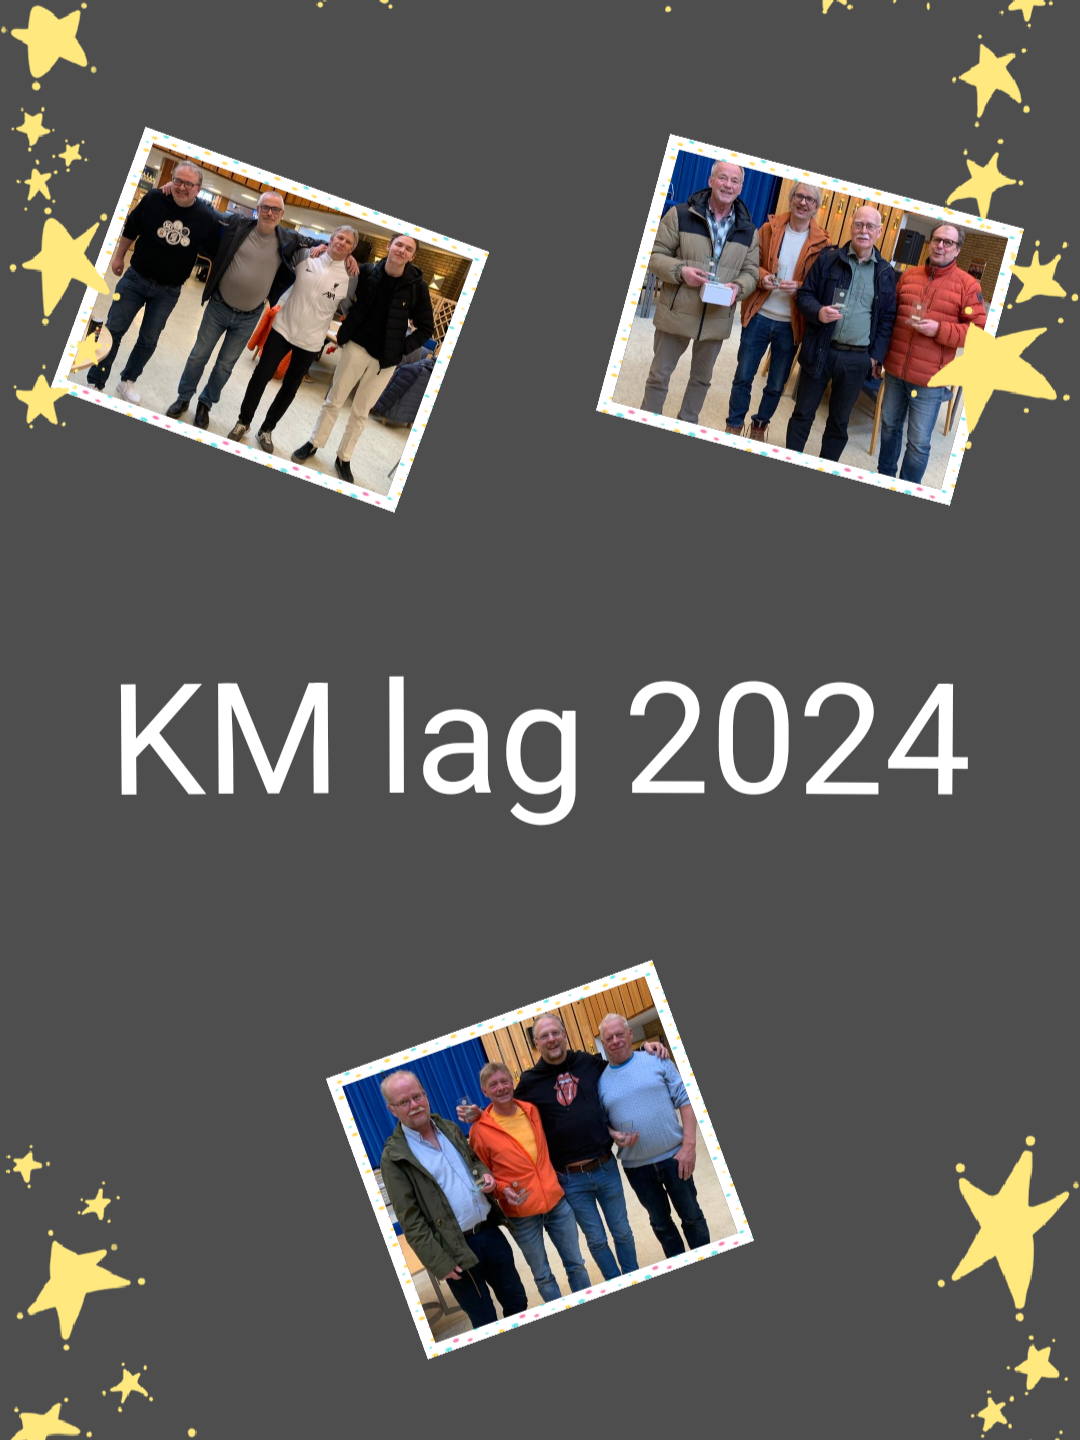 KM Lag 2024 ble arrangert i Narvik 6-7 April